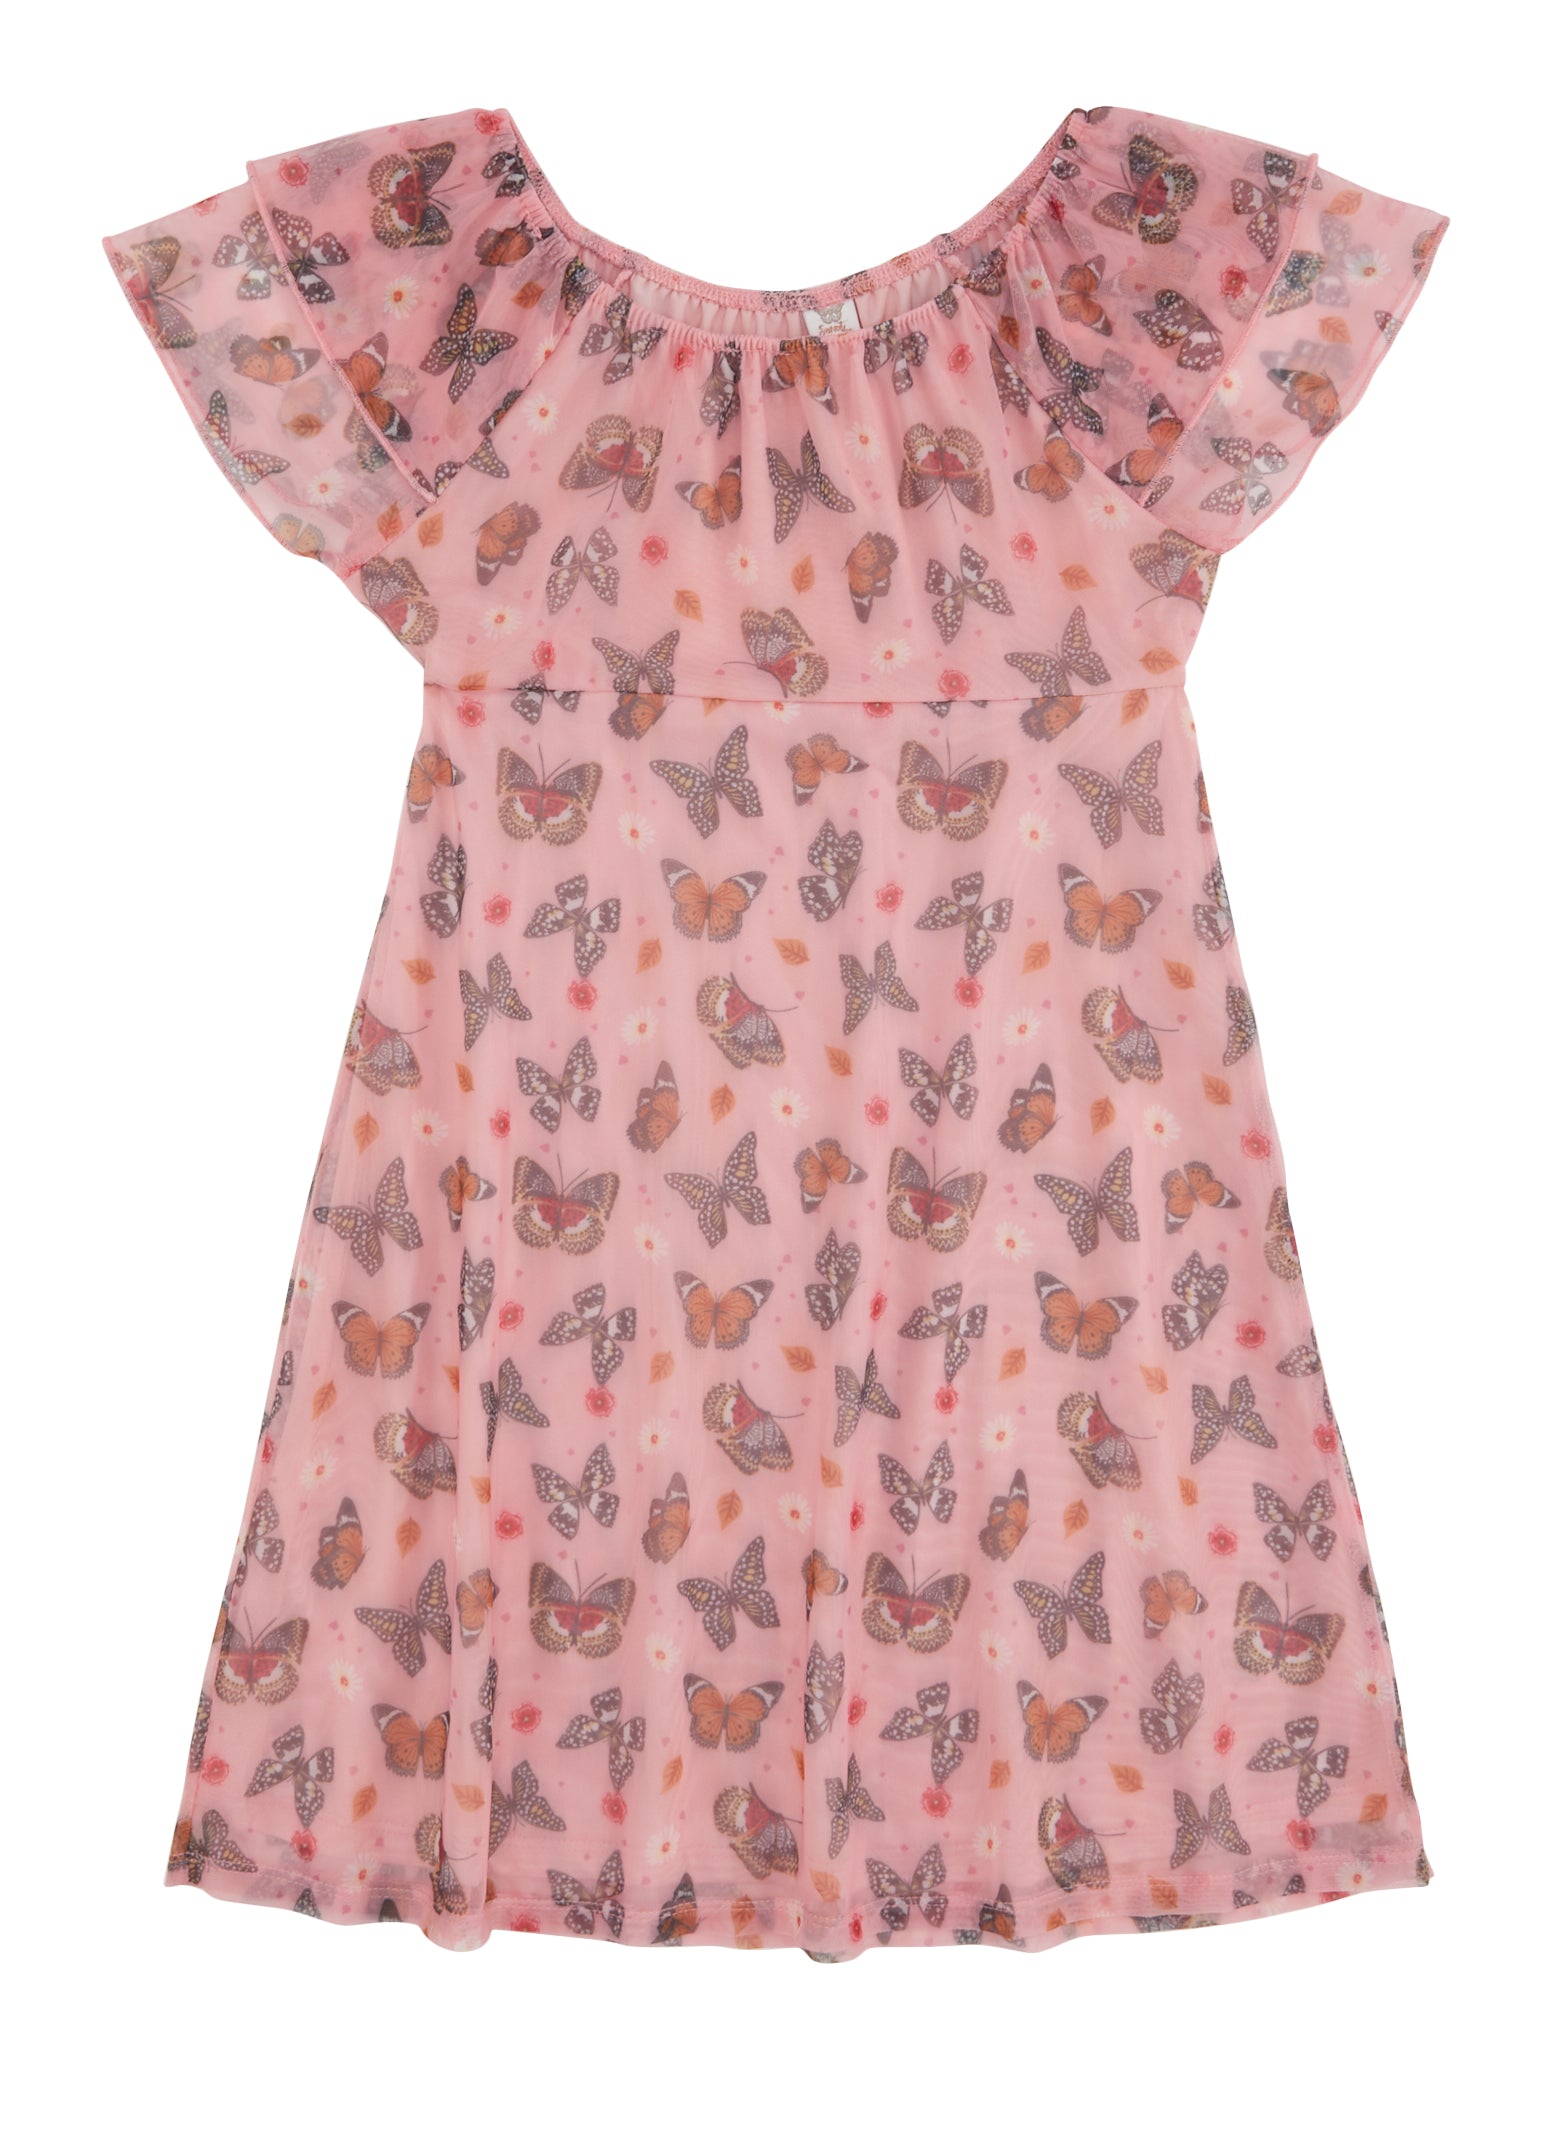 Girls Mesh Butterfly Print Flare Dress, Pink, Size 10-12